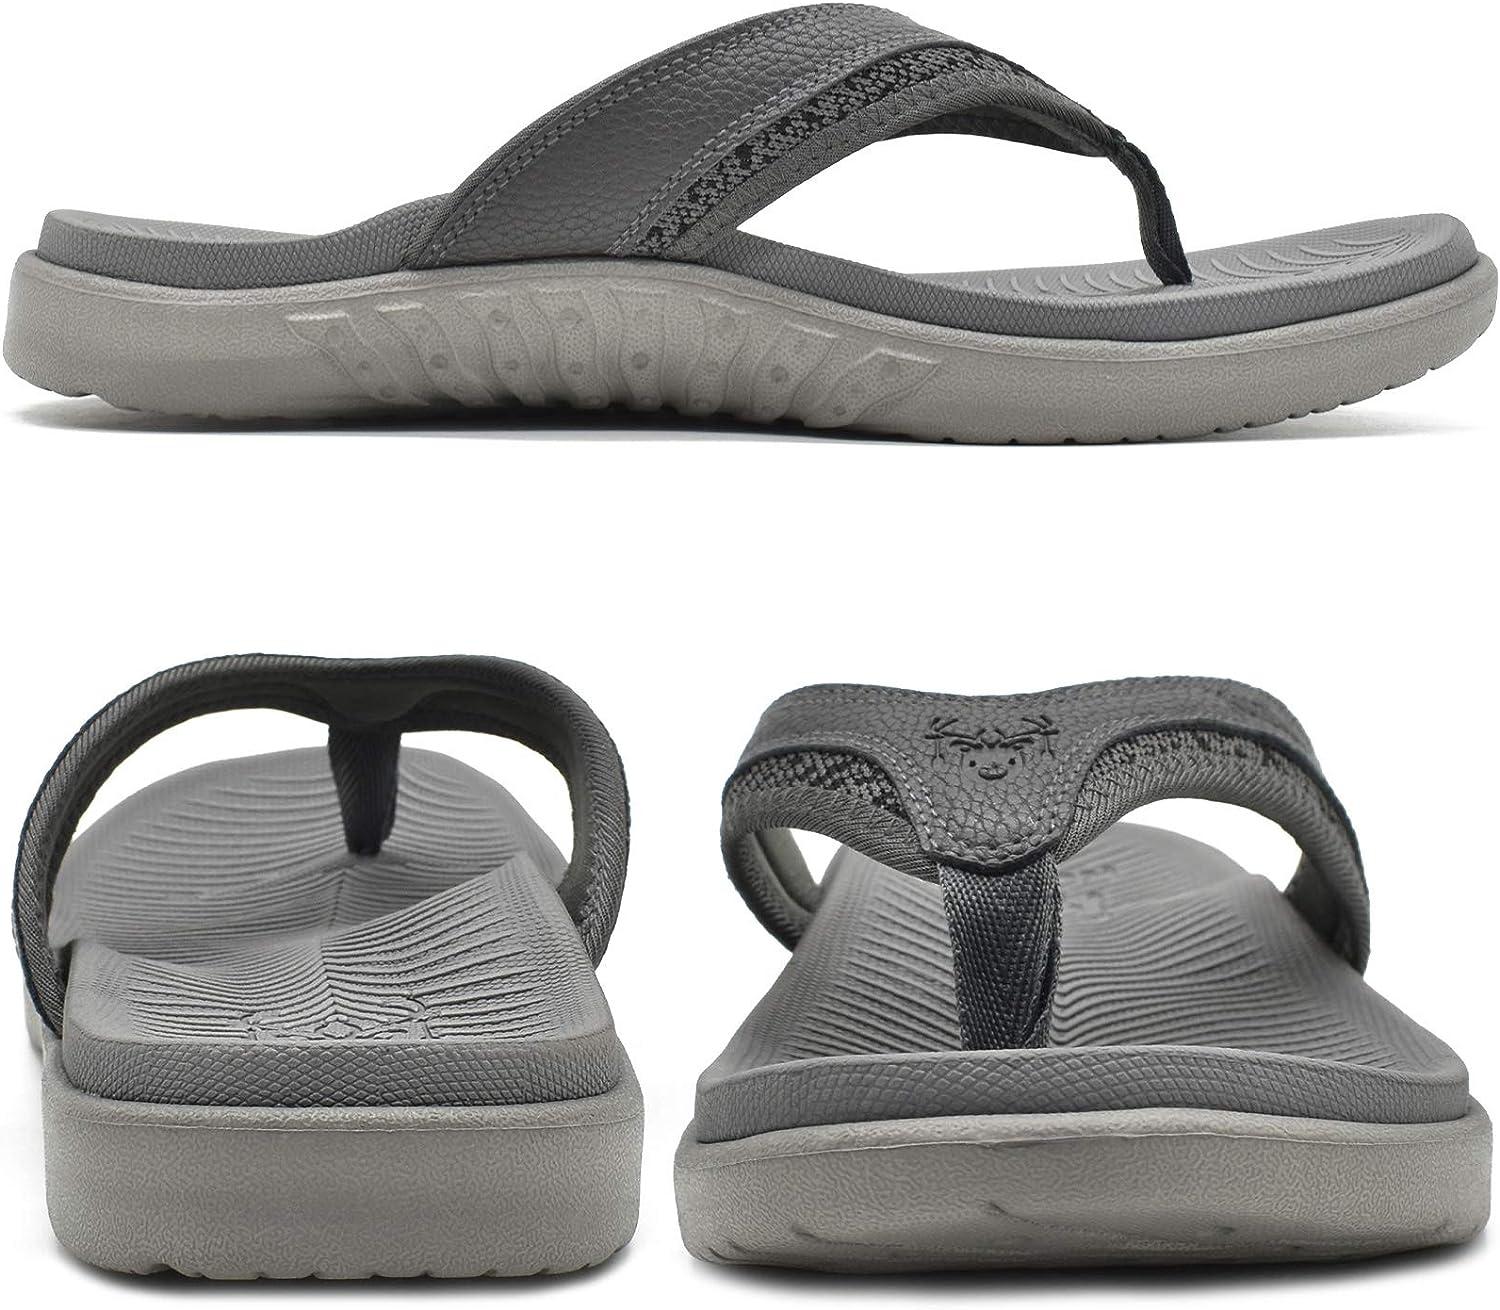  KuaiLu Men's Yoga Mat Leather Flip Flops Thong Sandals